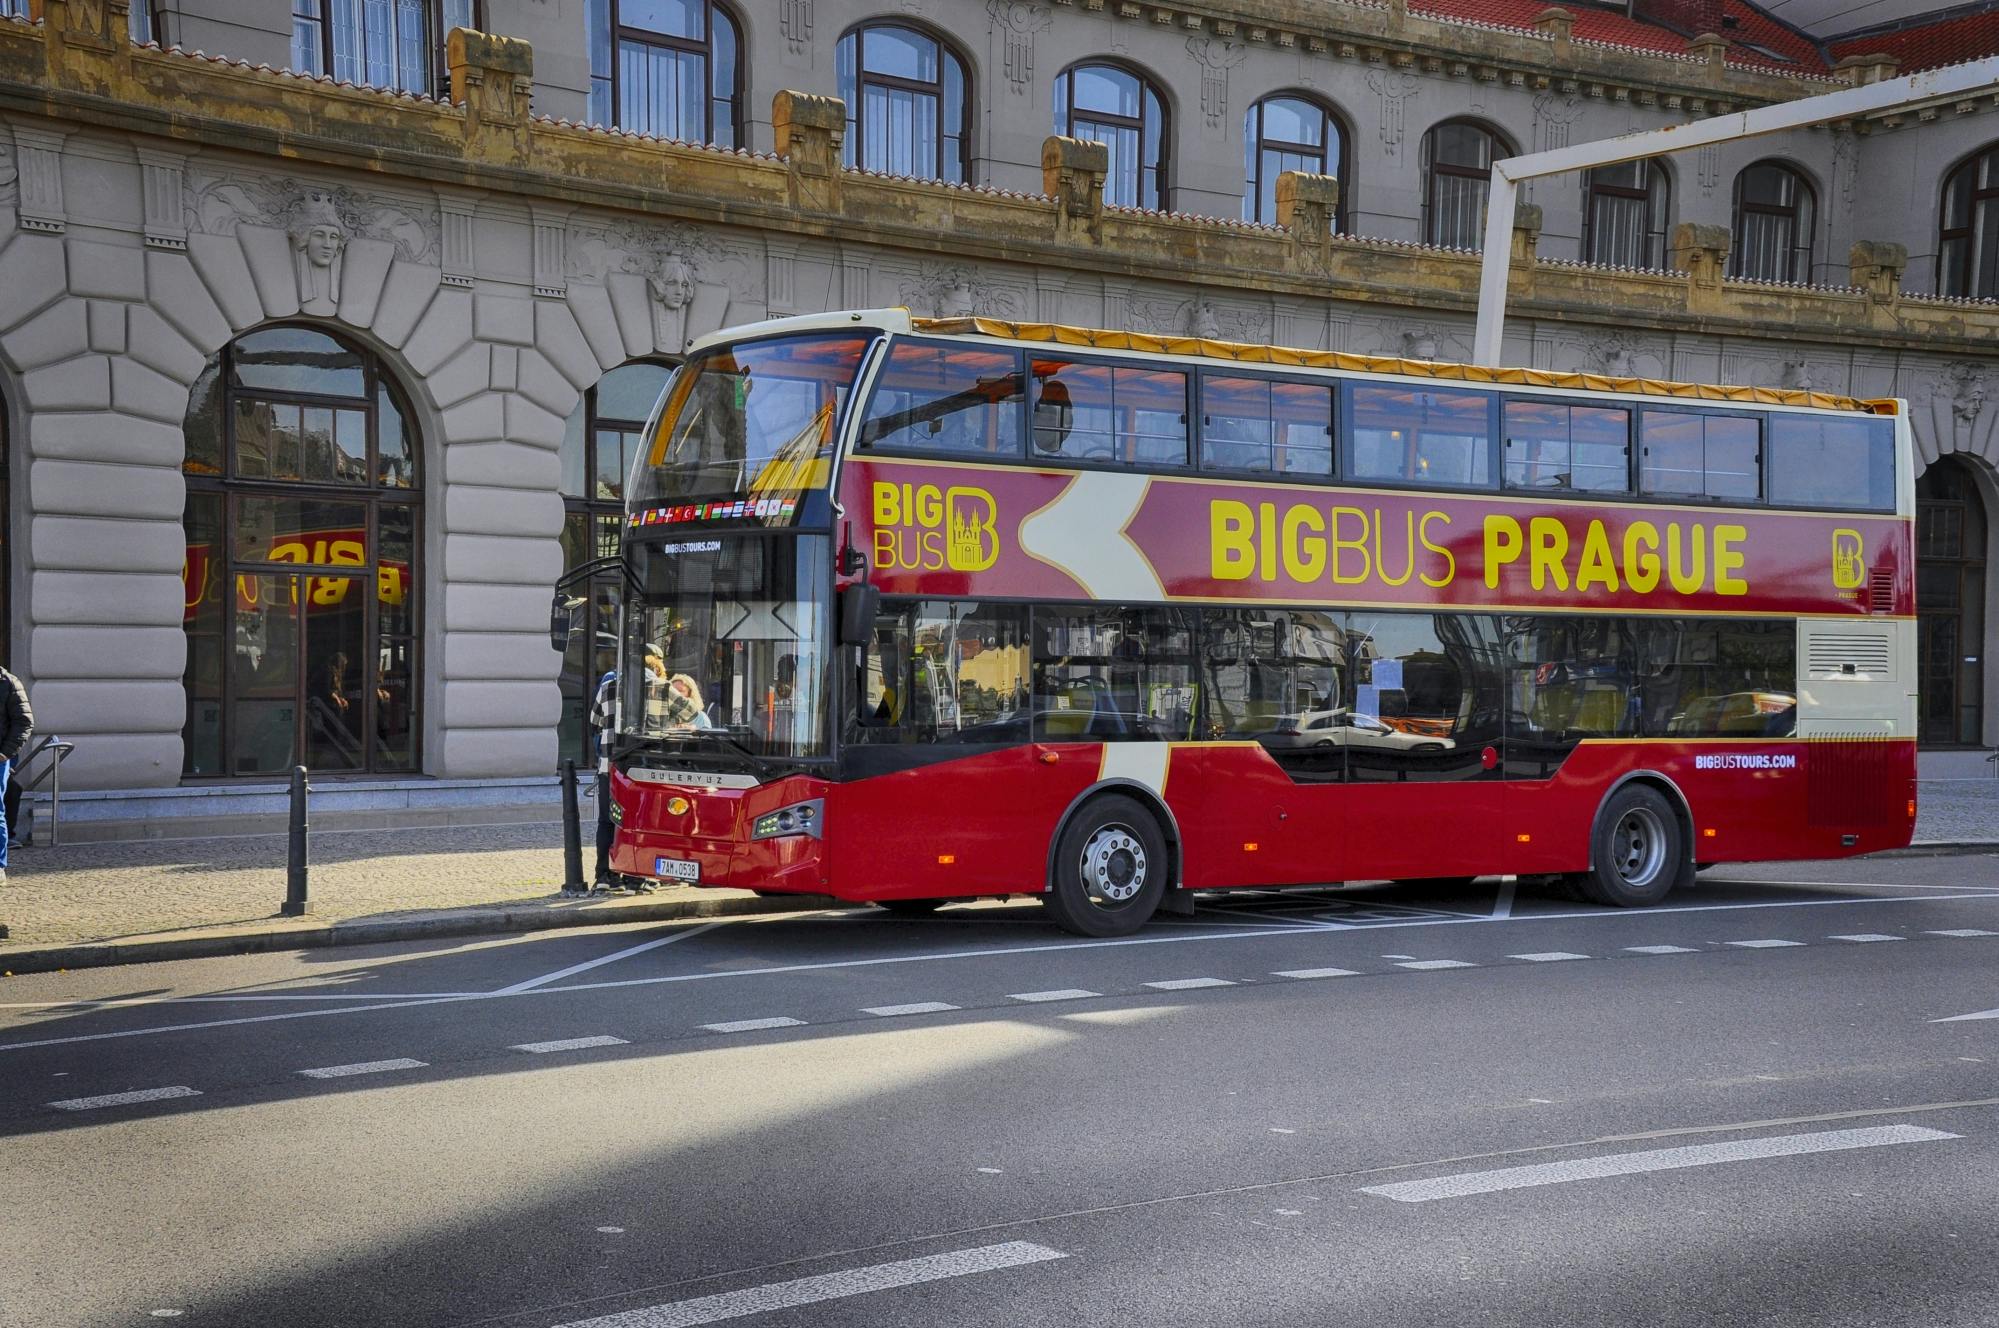 Big Bus hop-on hop-off bus tour of Prague